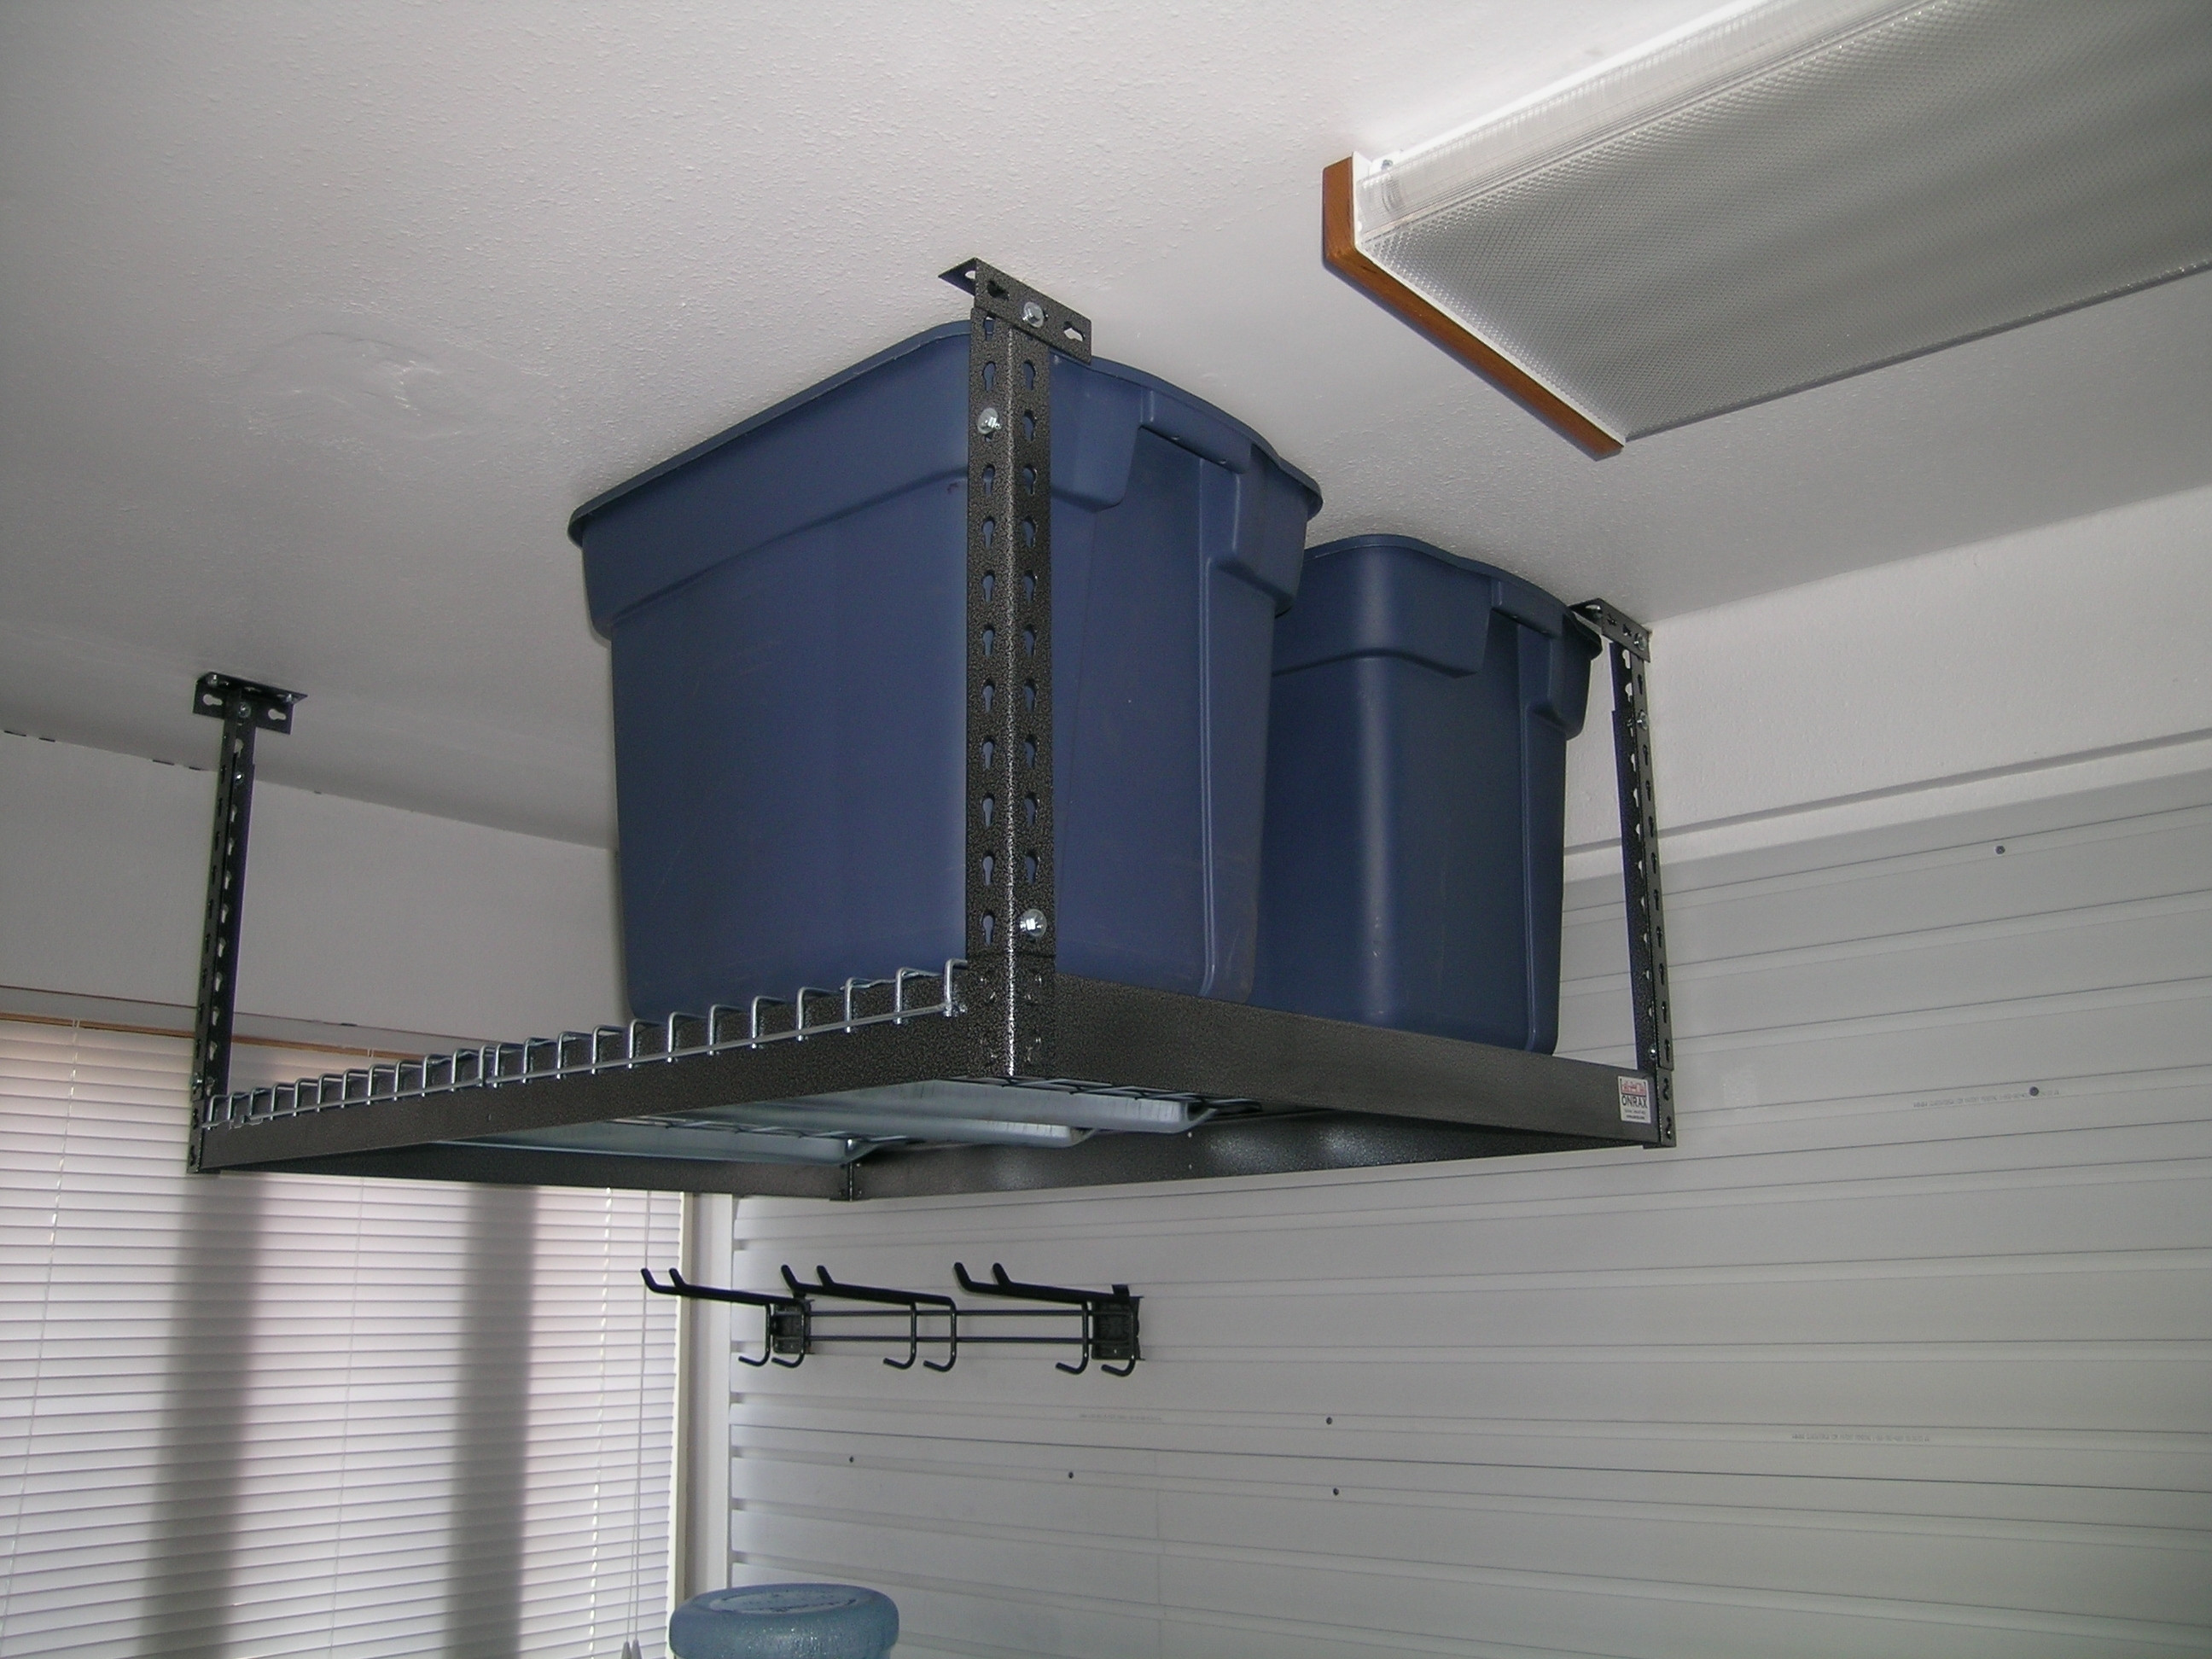 Best ideas about Overhead Garage Storage Installation
. Save or Pin Installing Advantages Overhead Garage Storage — The Home Now.